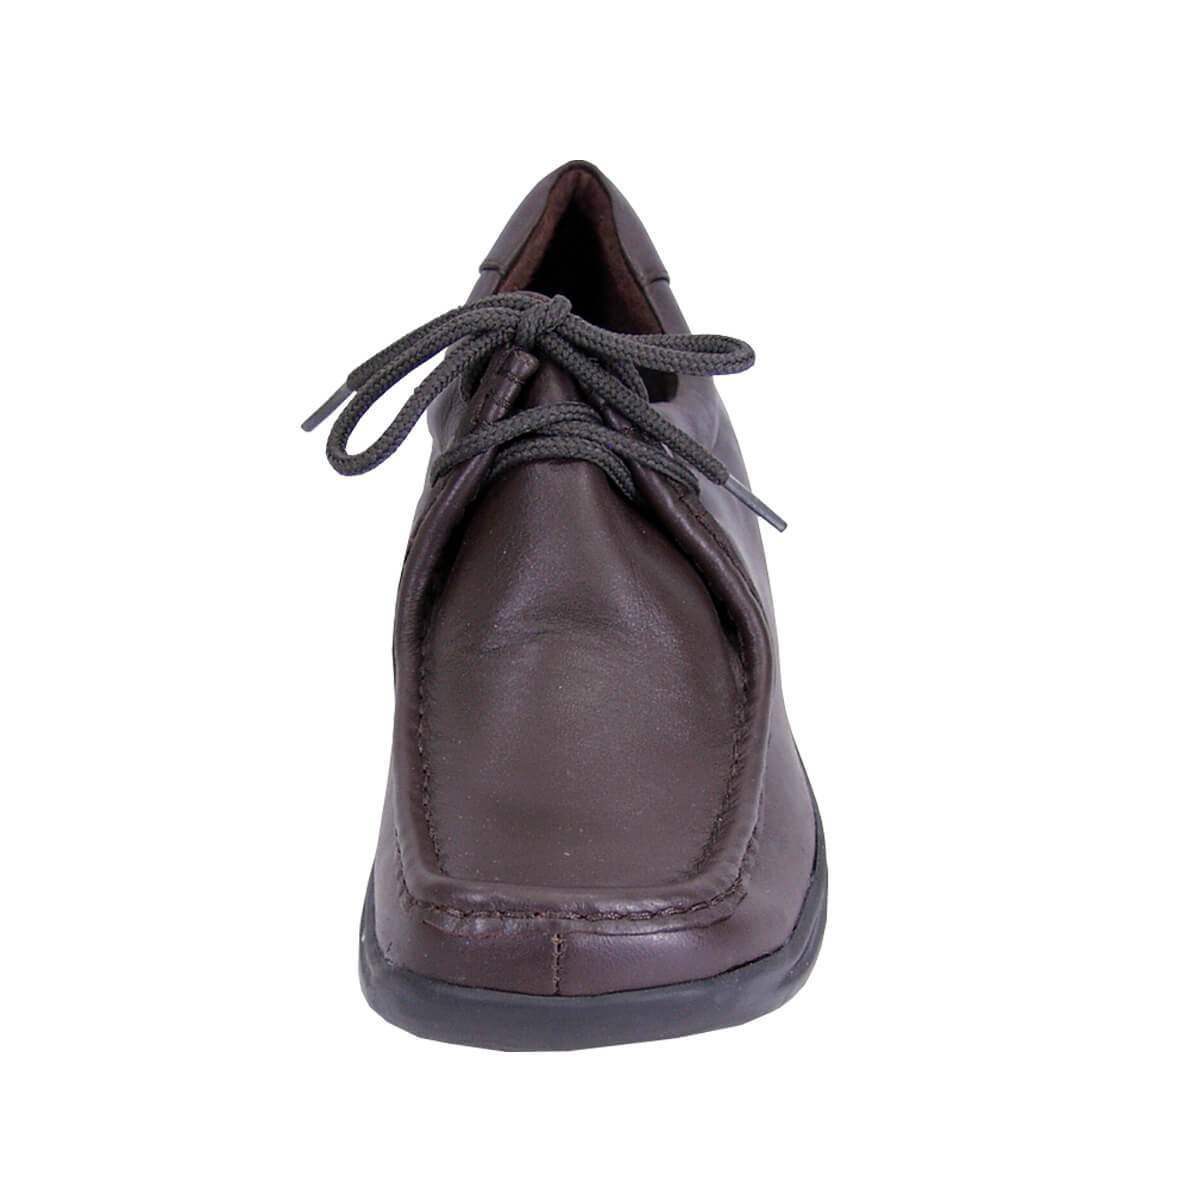 24 HOUR COMFORT Kris Women's Wide Width Leather Shoes